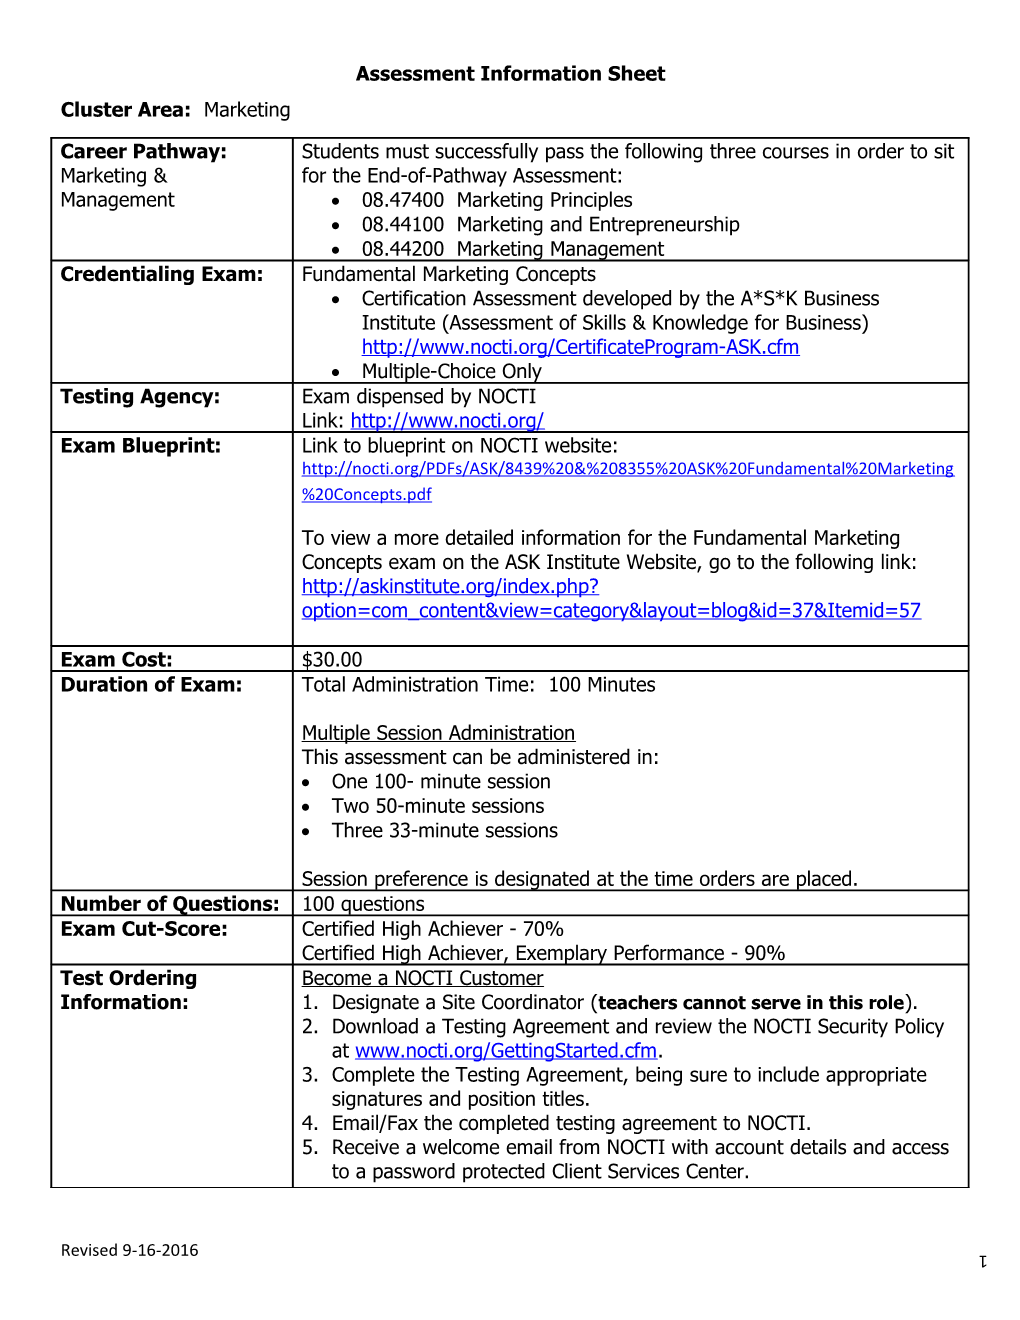 Assessment Information Sheet s2